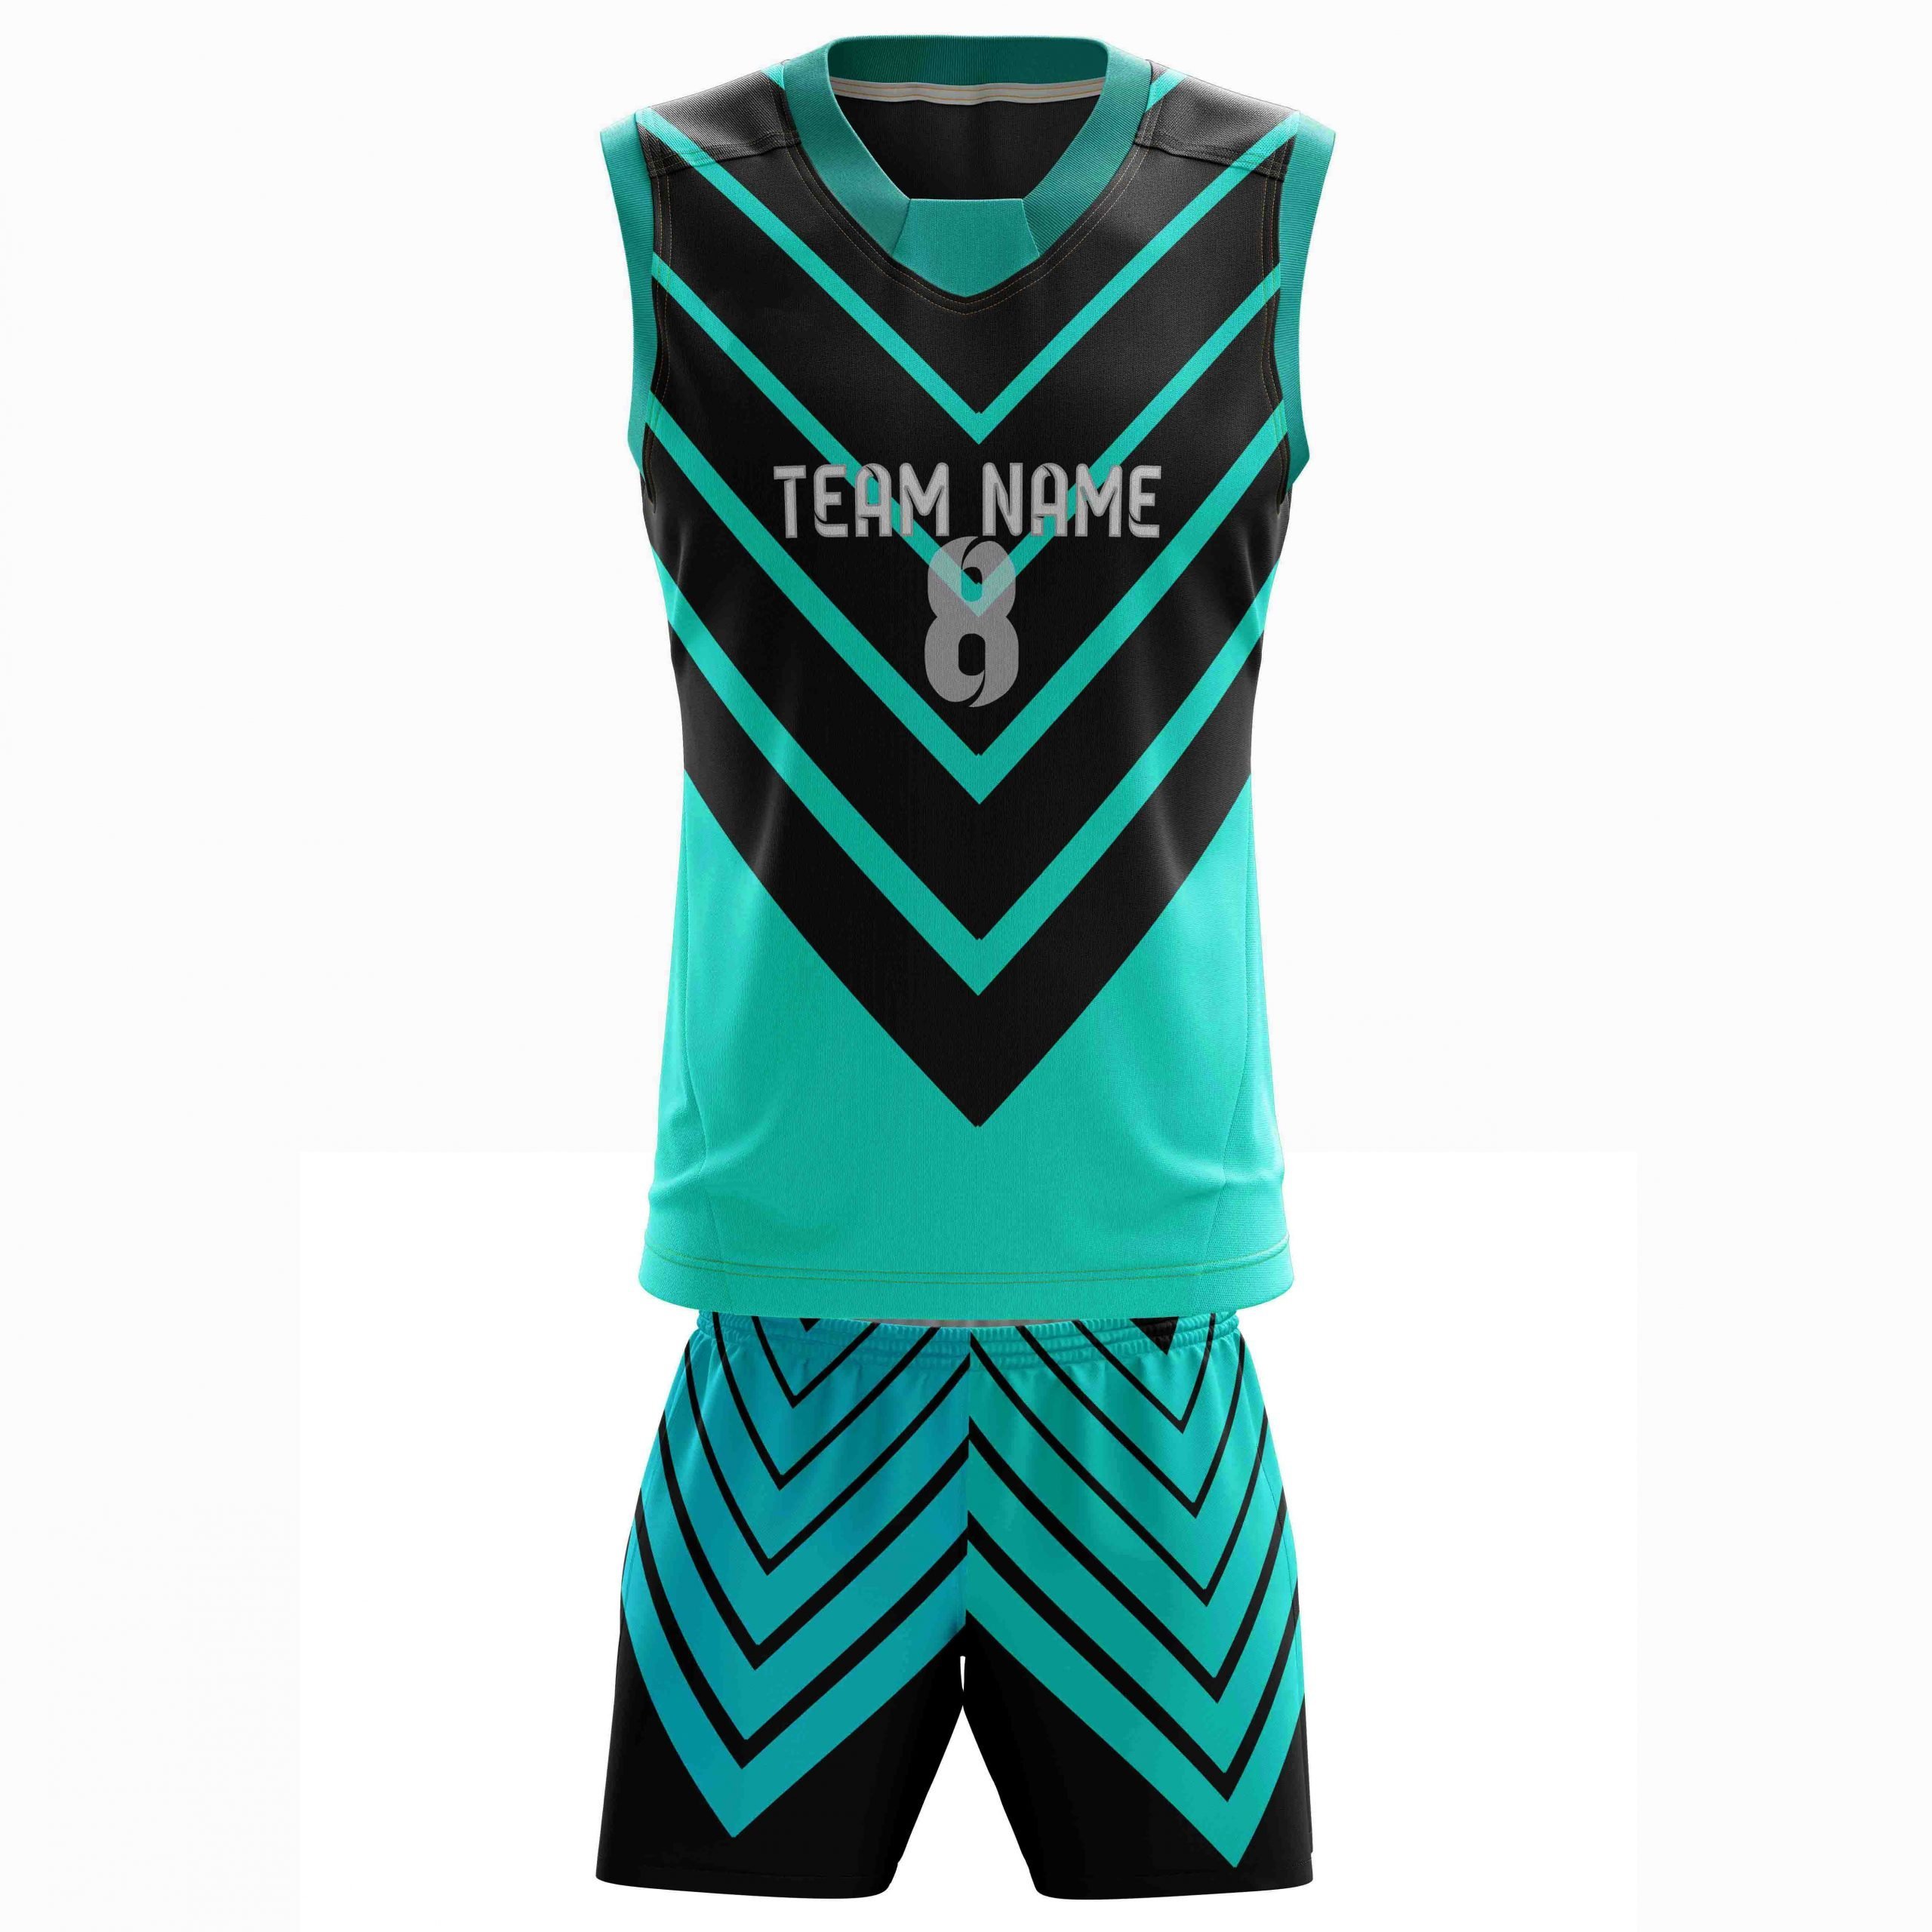 wholesale your own logos or team sublimation custom Basketball Uniform